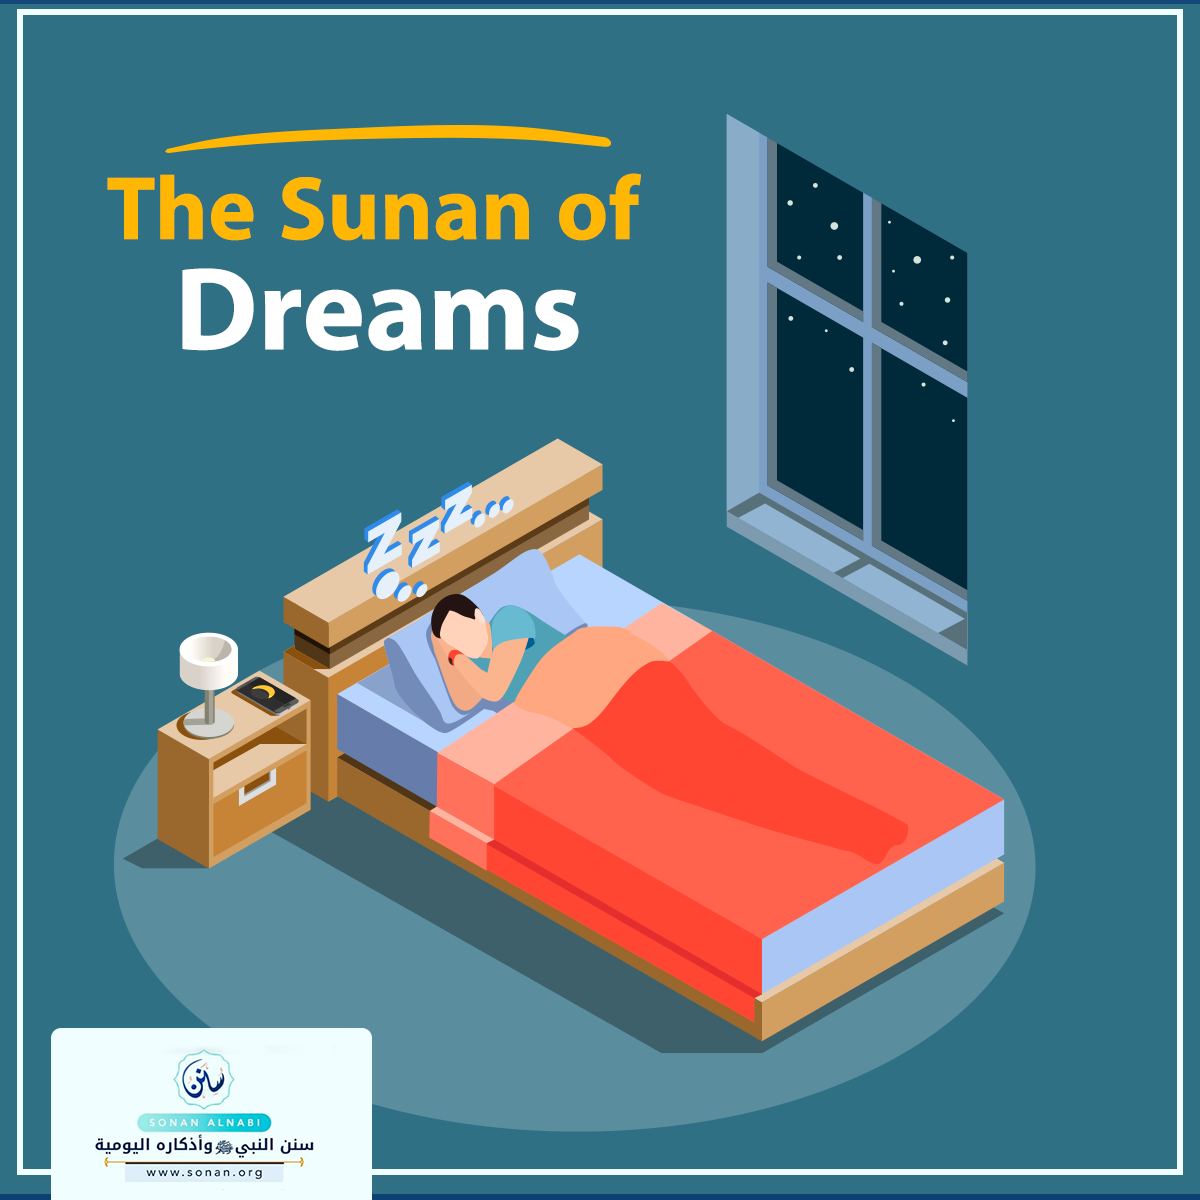 The Sunan of Dreams